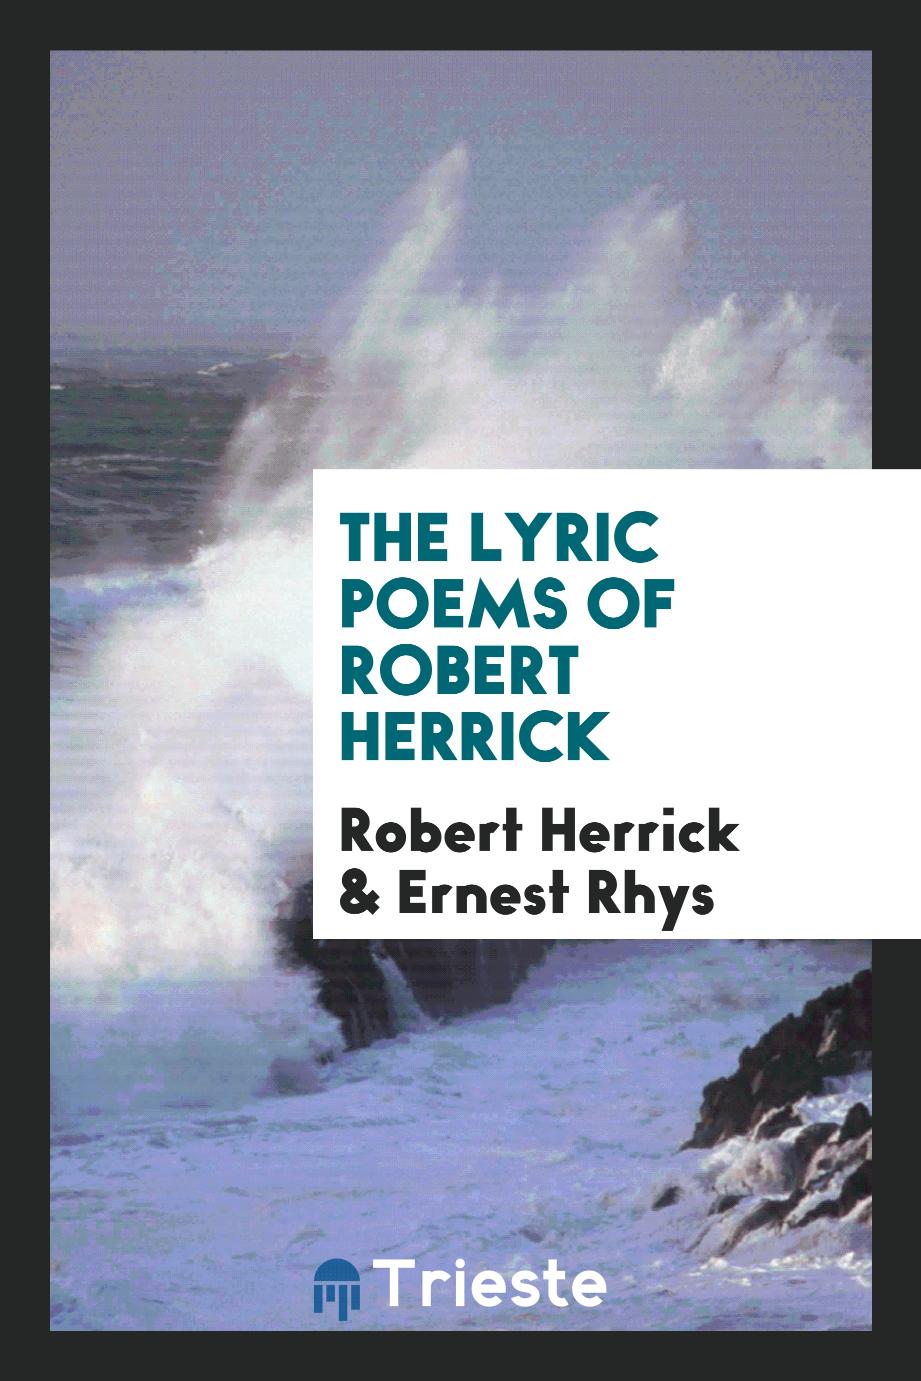 The lyric poems of Robert Herrick